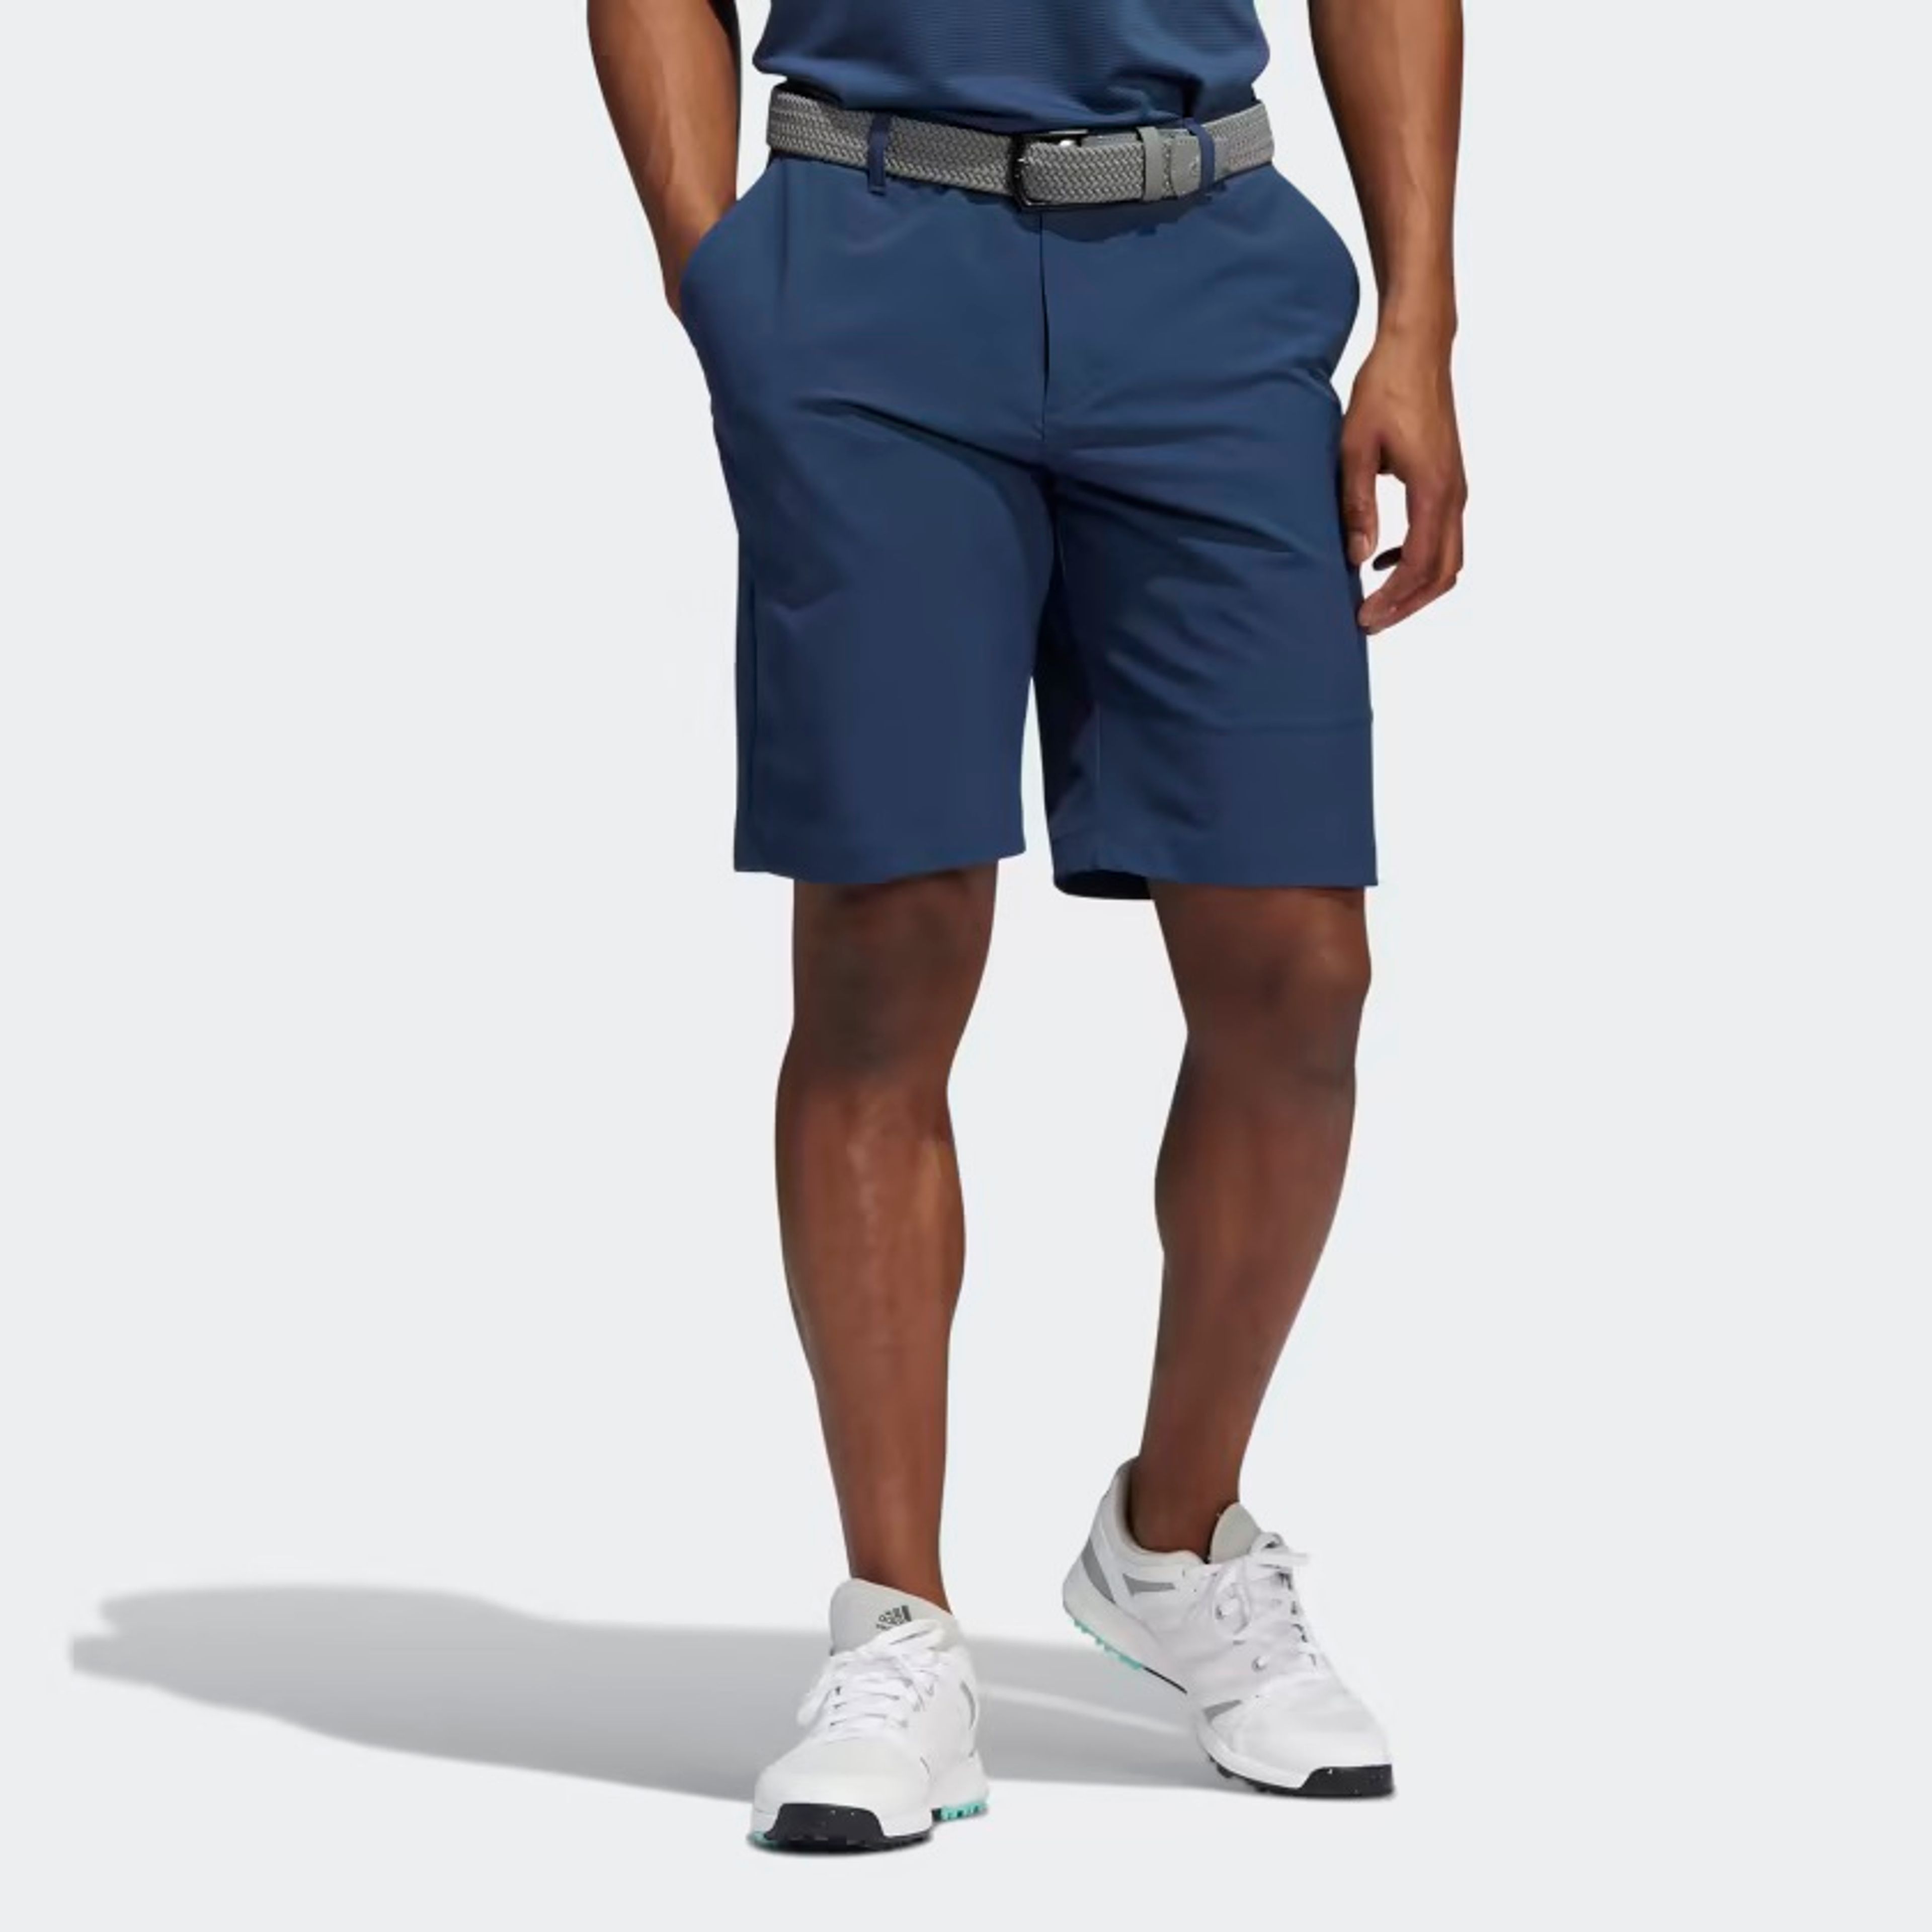 Adidas Men's Ultimate 365 Core Golf Shorts product image